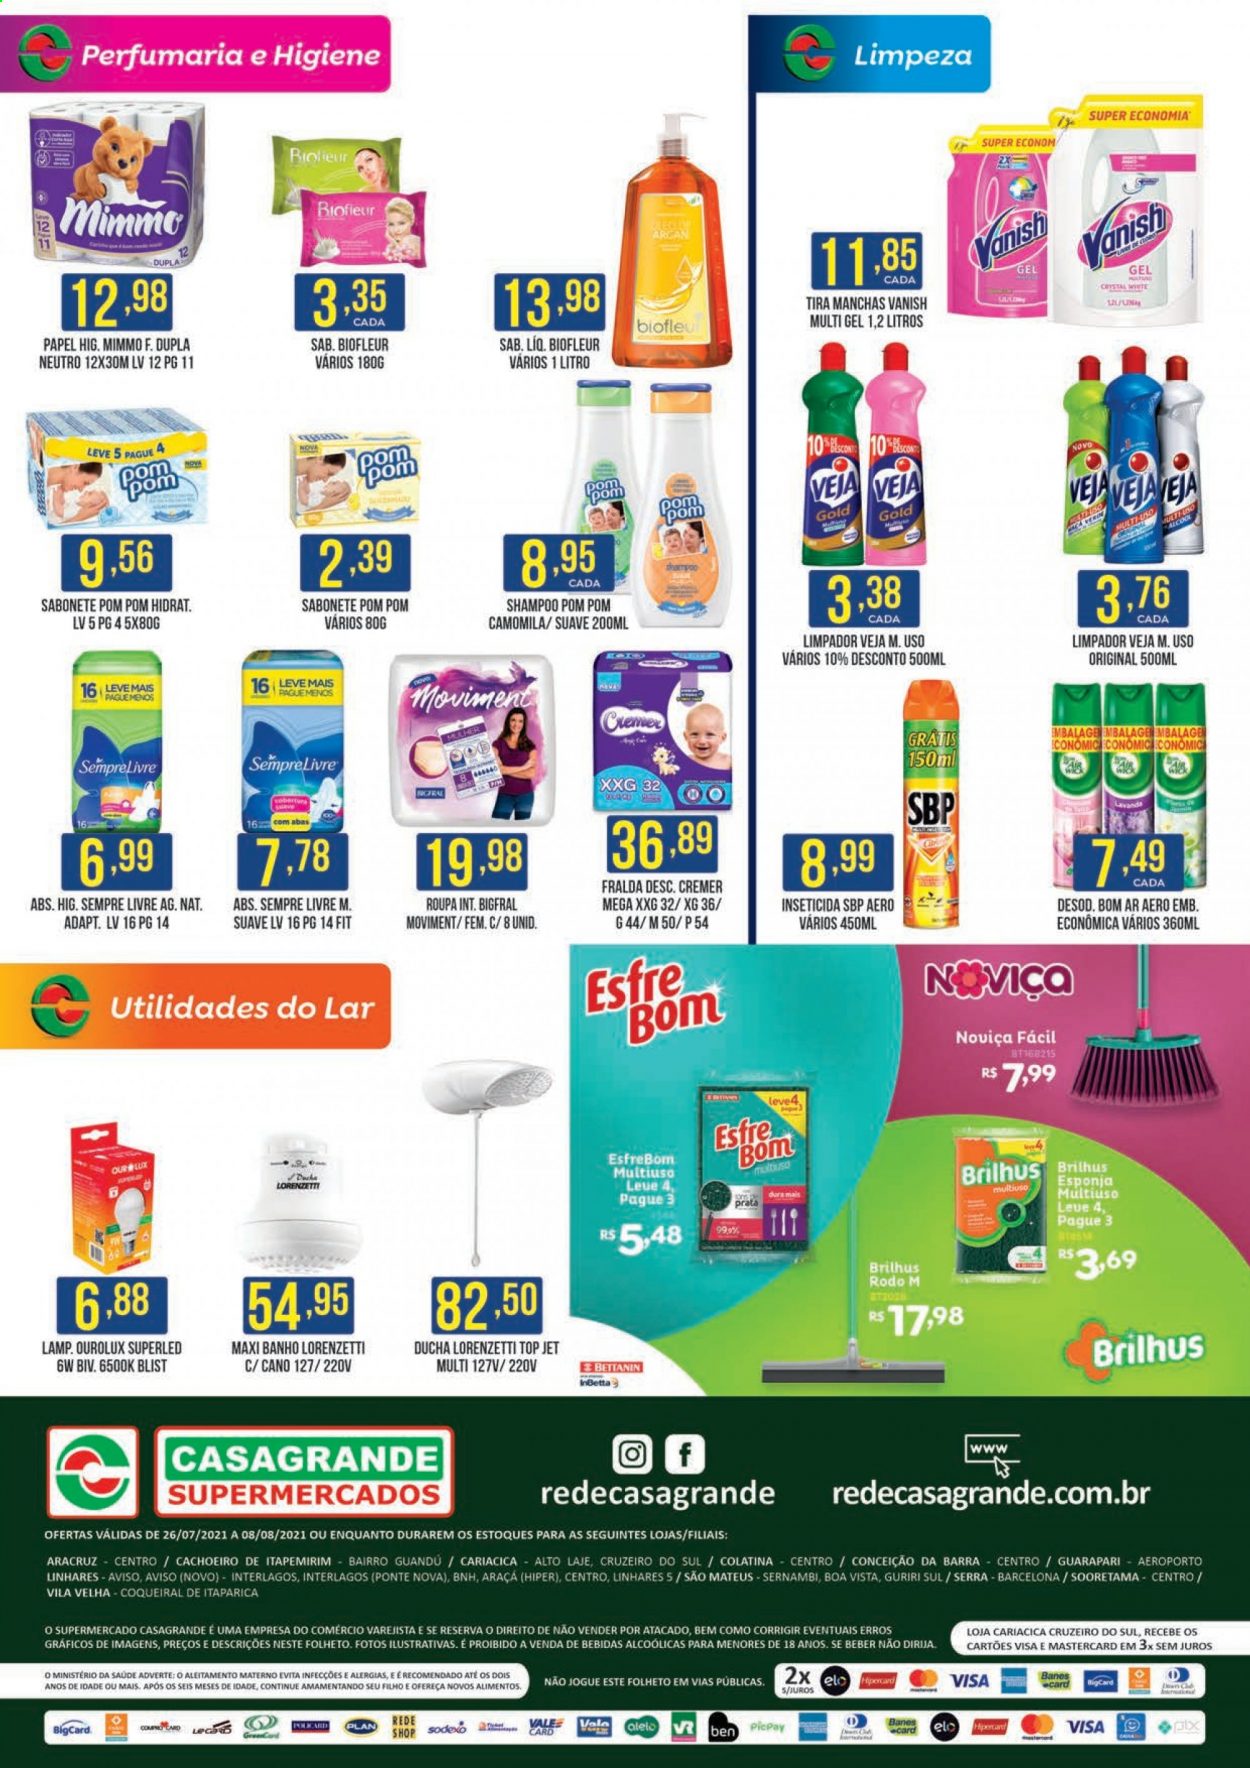 Encarte Casagrande Supermercados  - 26.07.2021 - 08.08.2021.